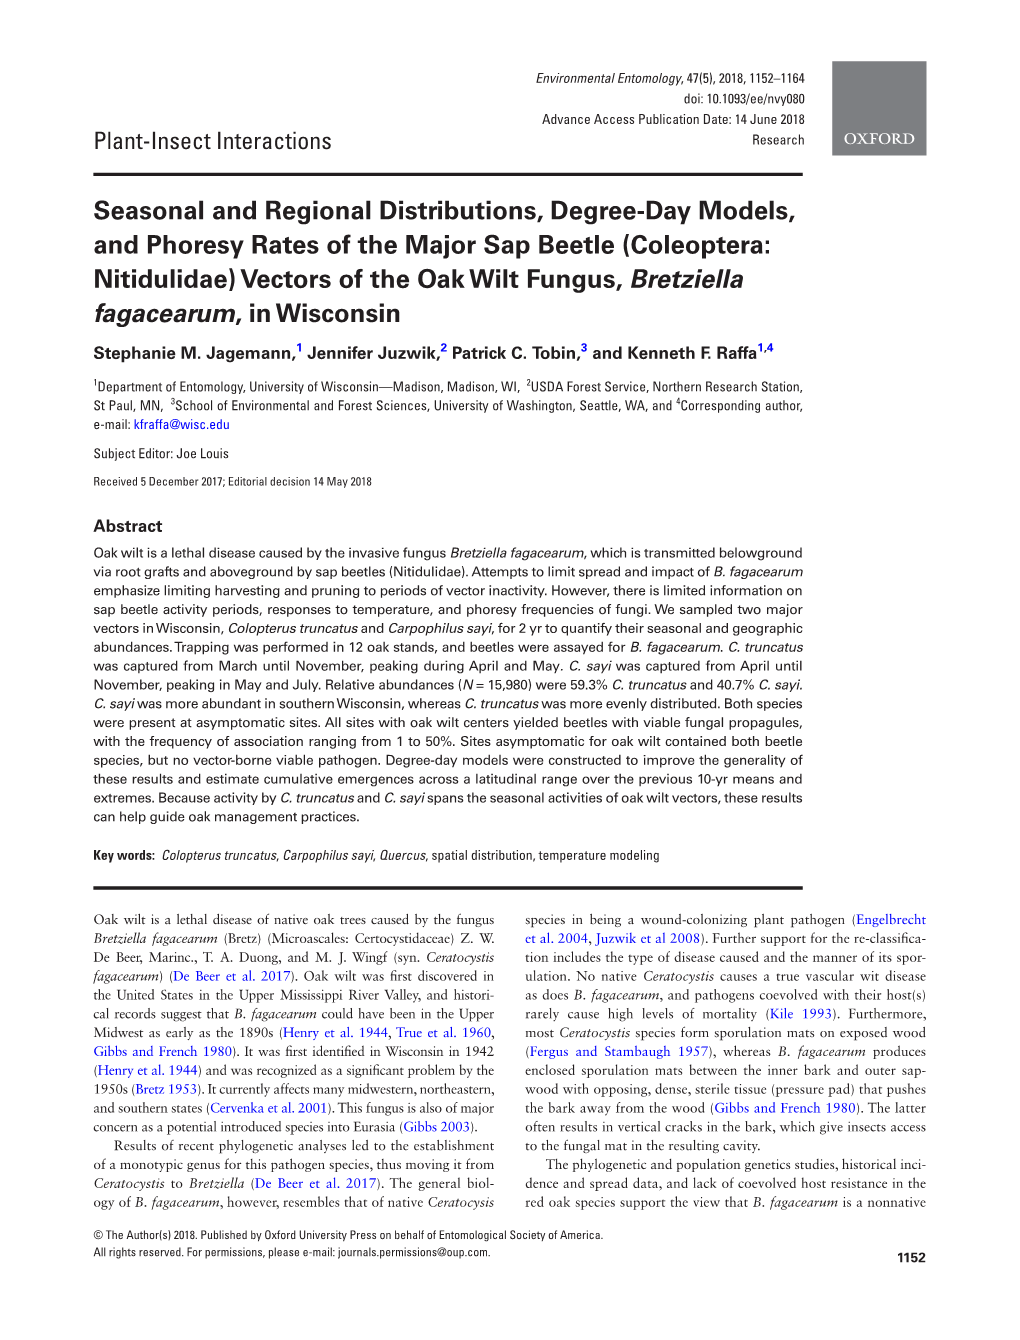 Seasonal and Regional Distributions, Degree-Day Models, and Phoresy